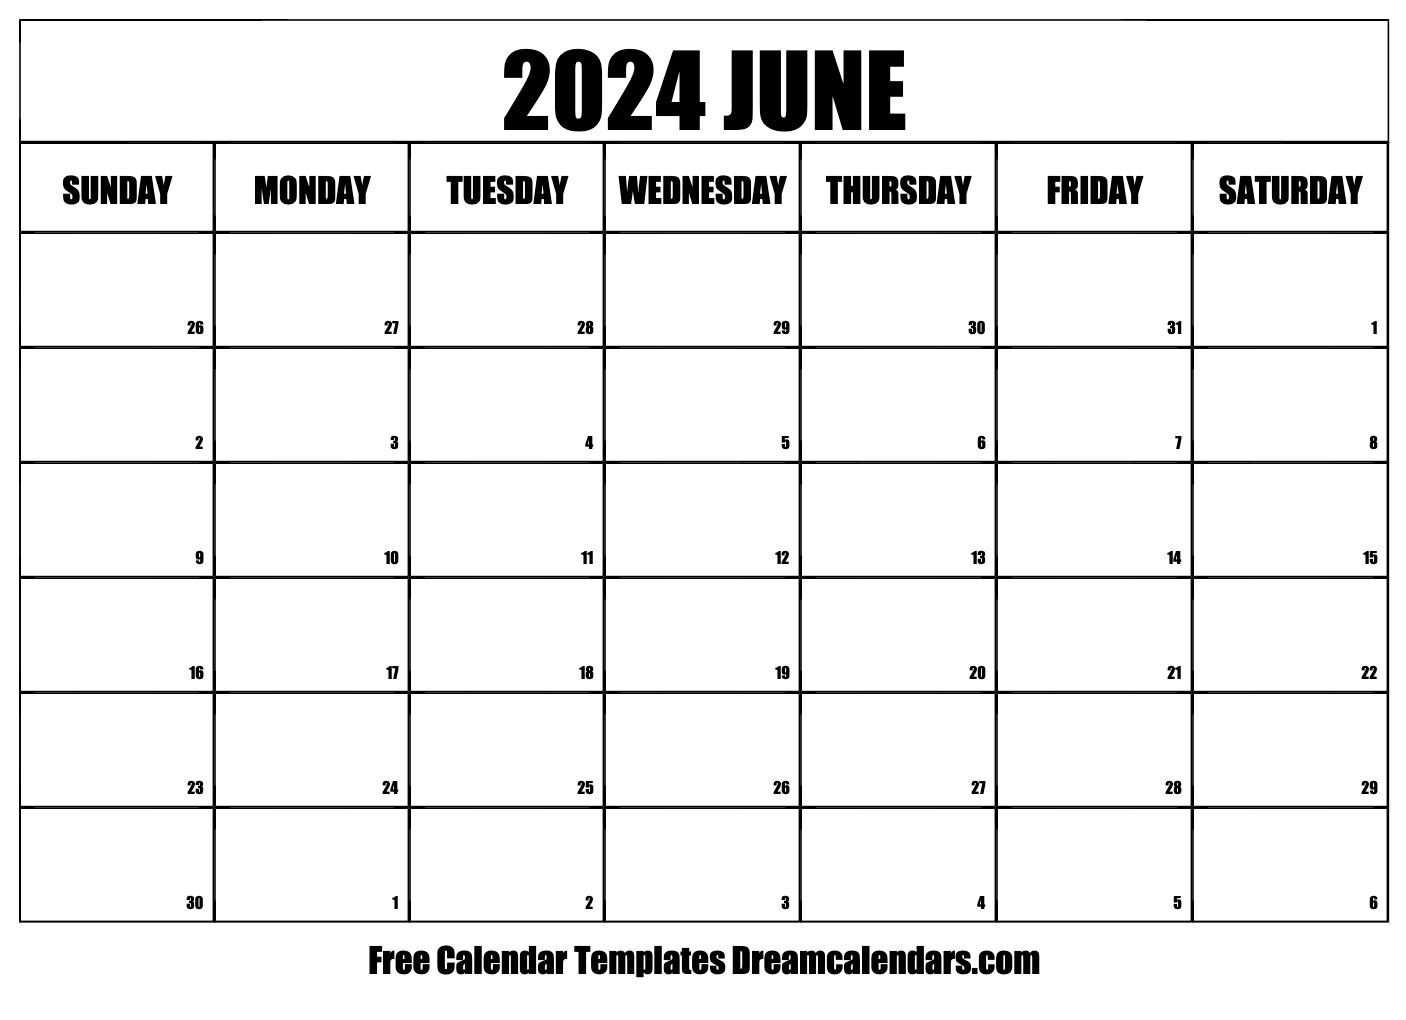 june-calendar-clipart-free-2024-latest-perfect-the-best-famous-moon-calendar-images-2024